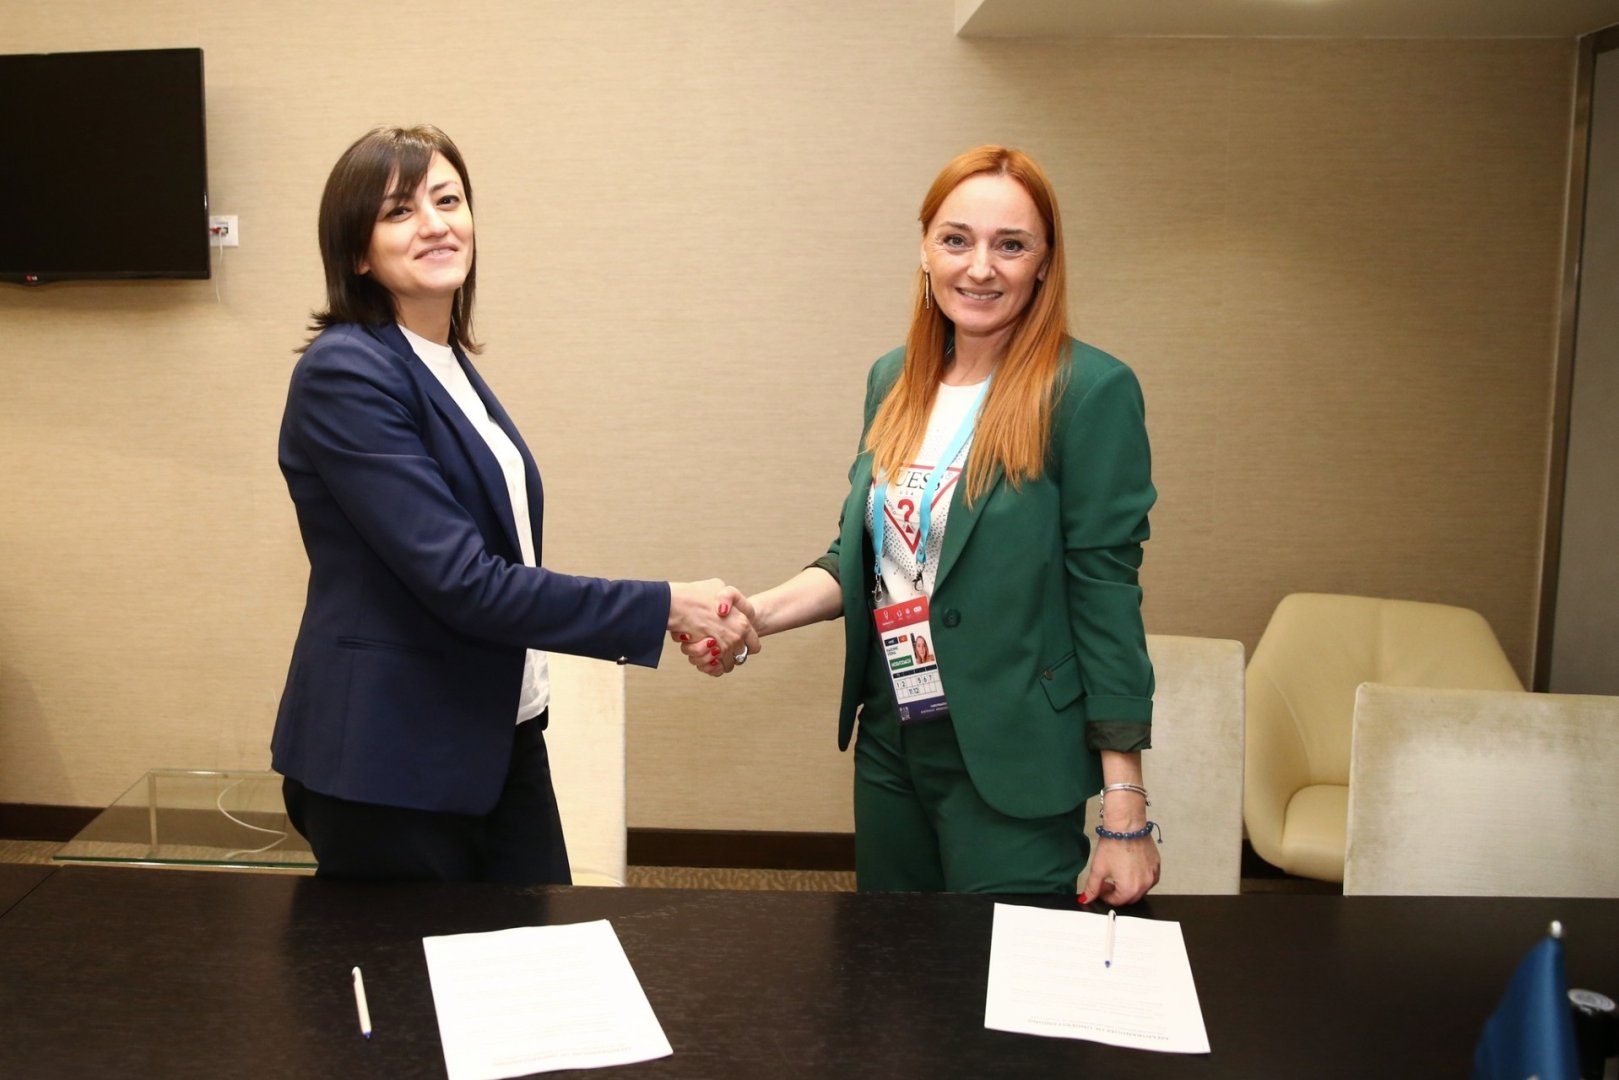 Подписан Меморандум о взаимопонимании между федерациями гимнастики Монтенегро и Азербайджана